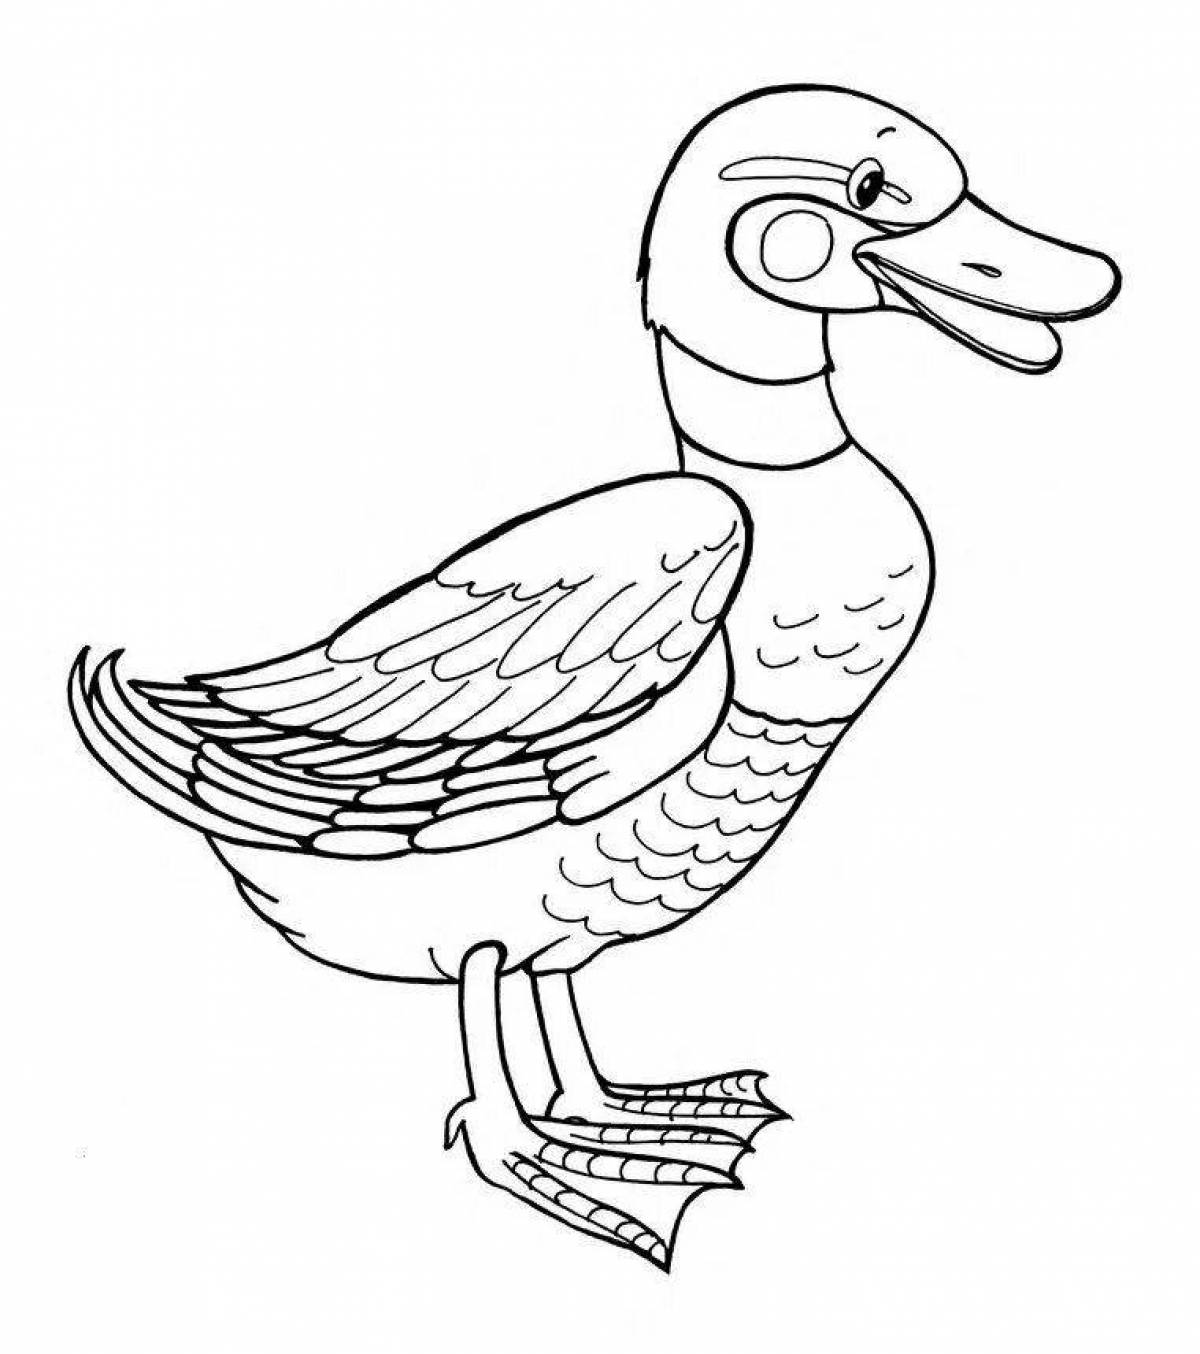 Coloring page gorgeous lanfan duck